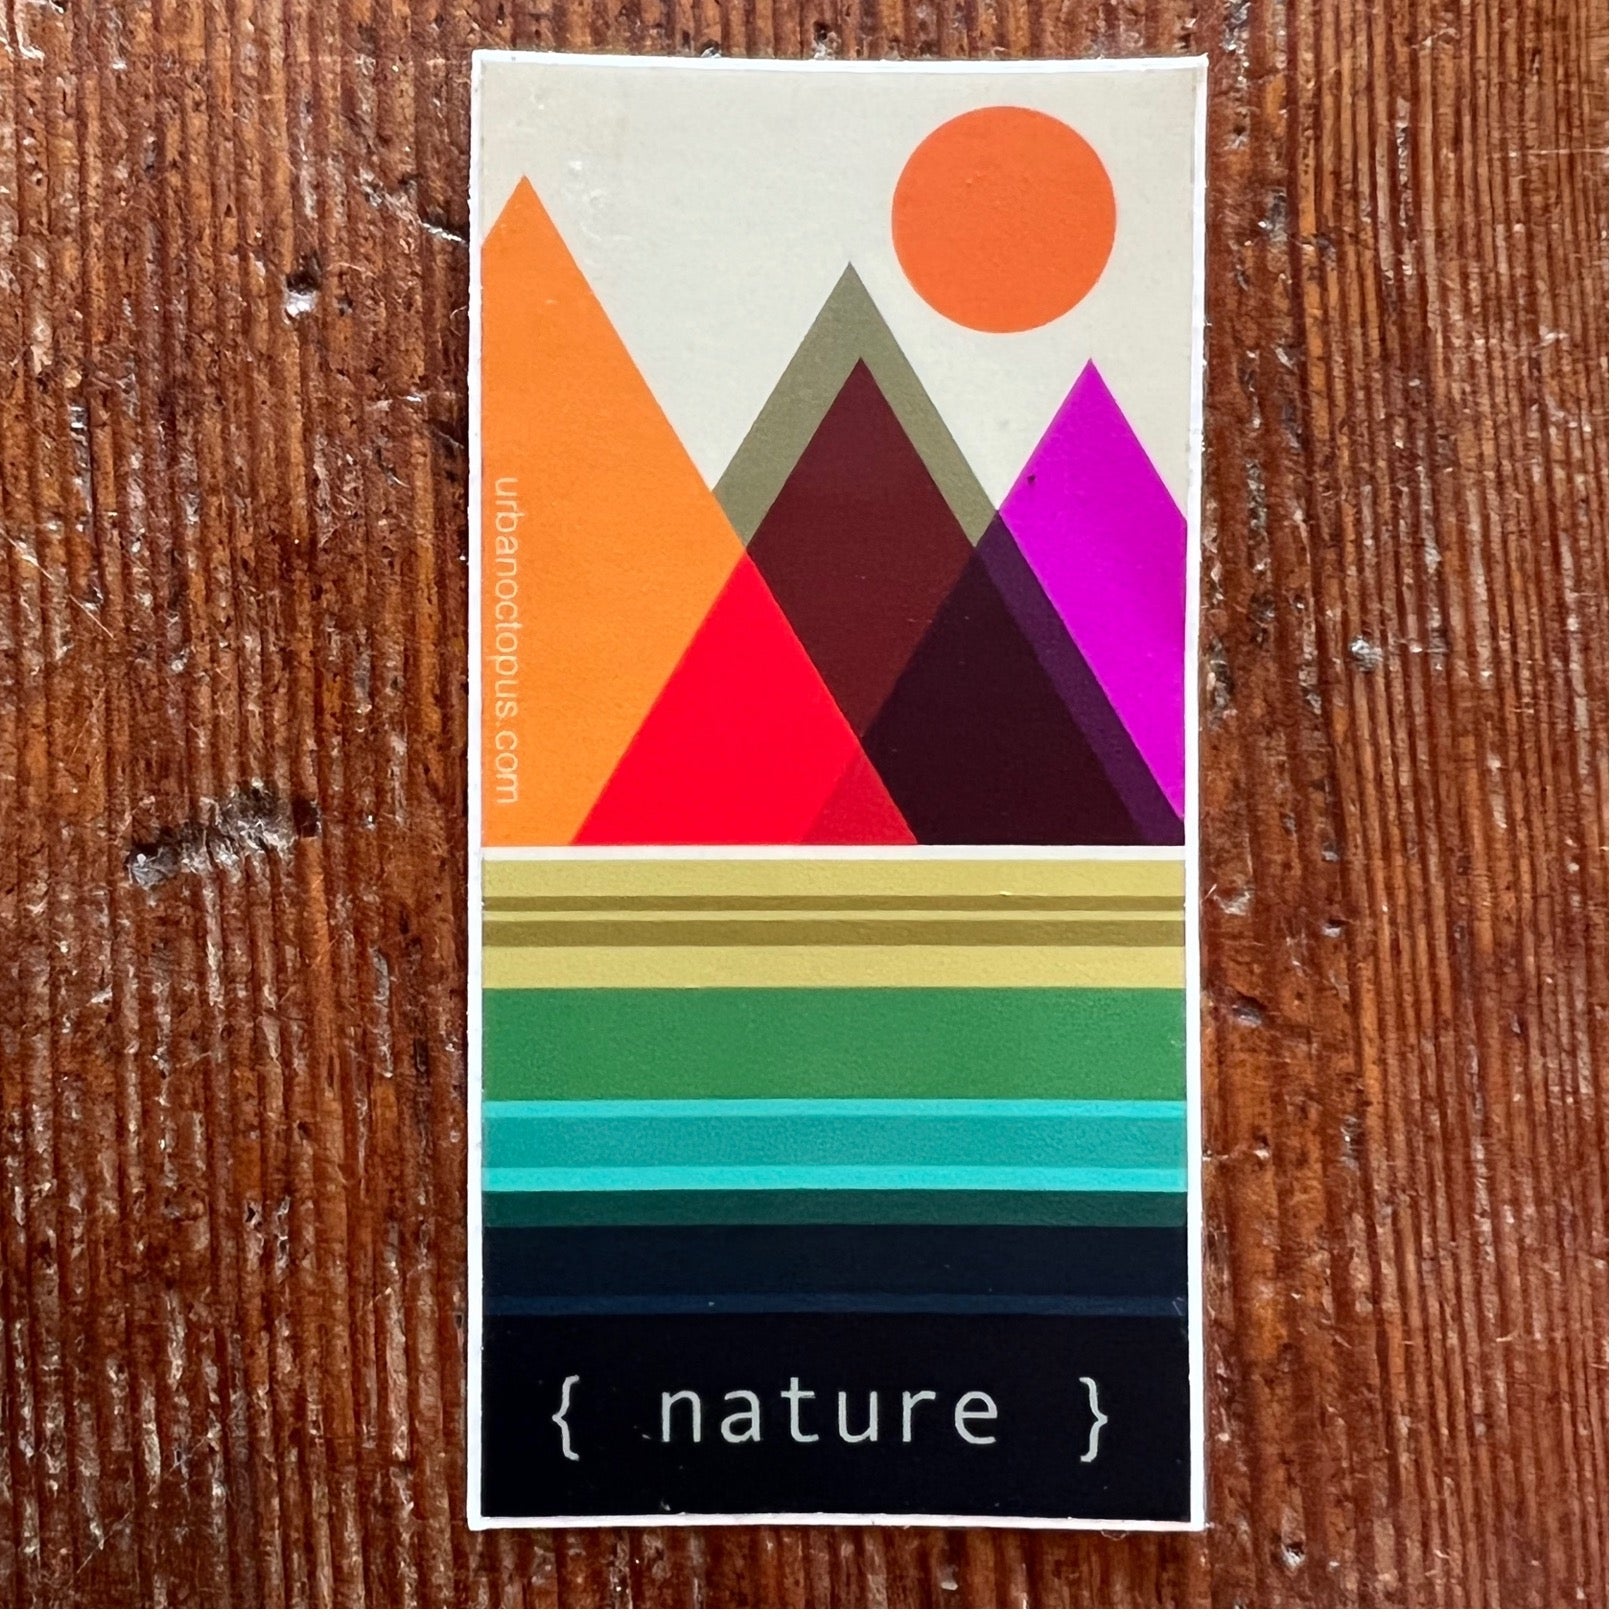 Nature Sticker